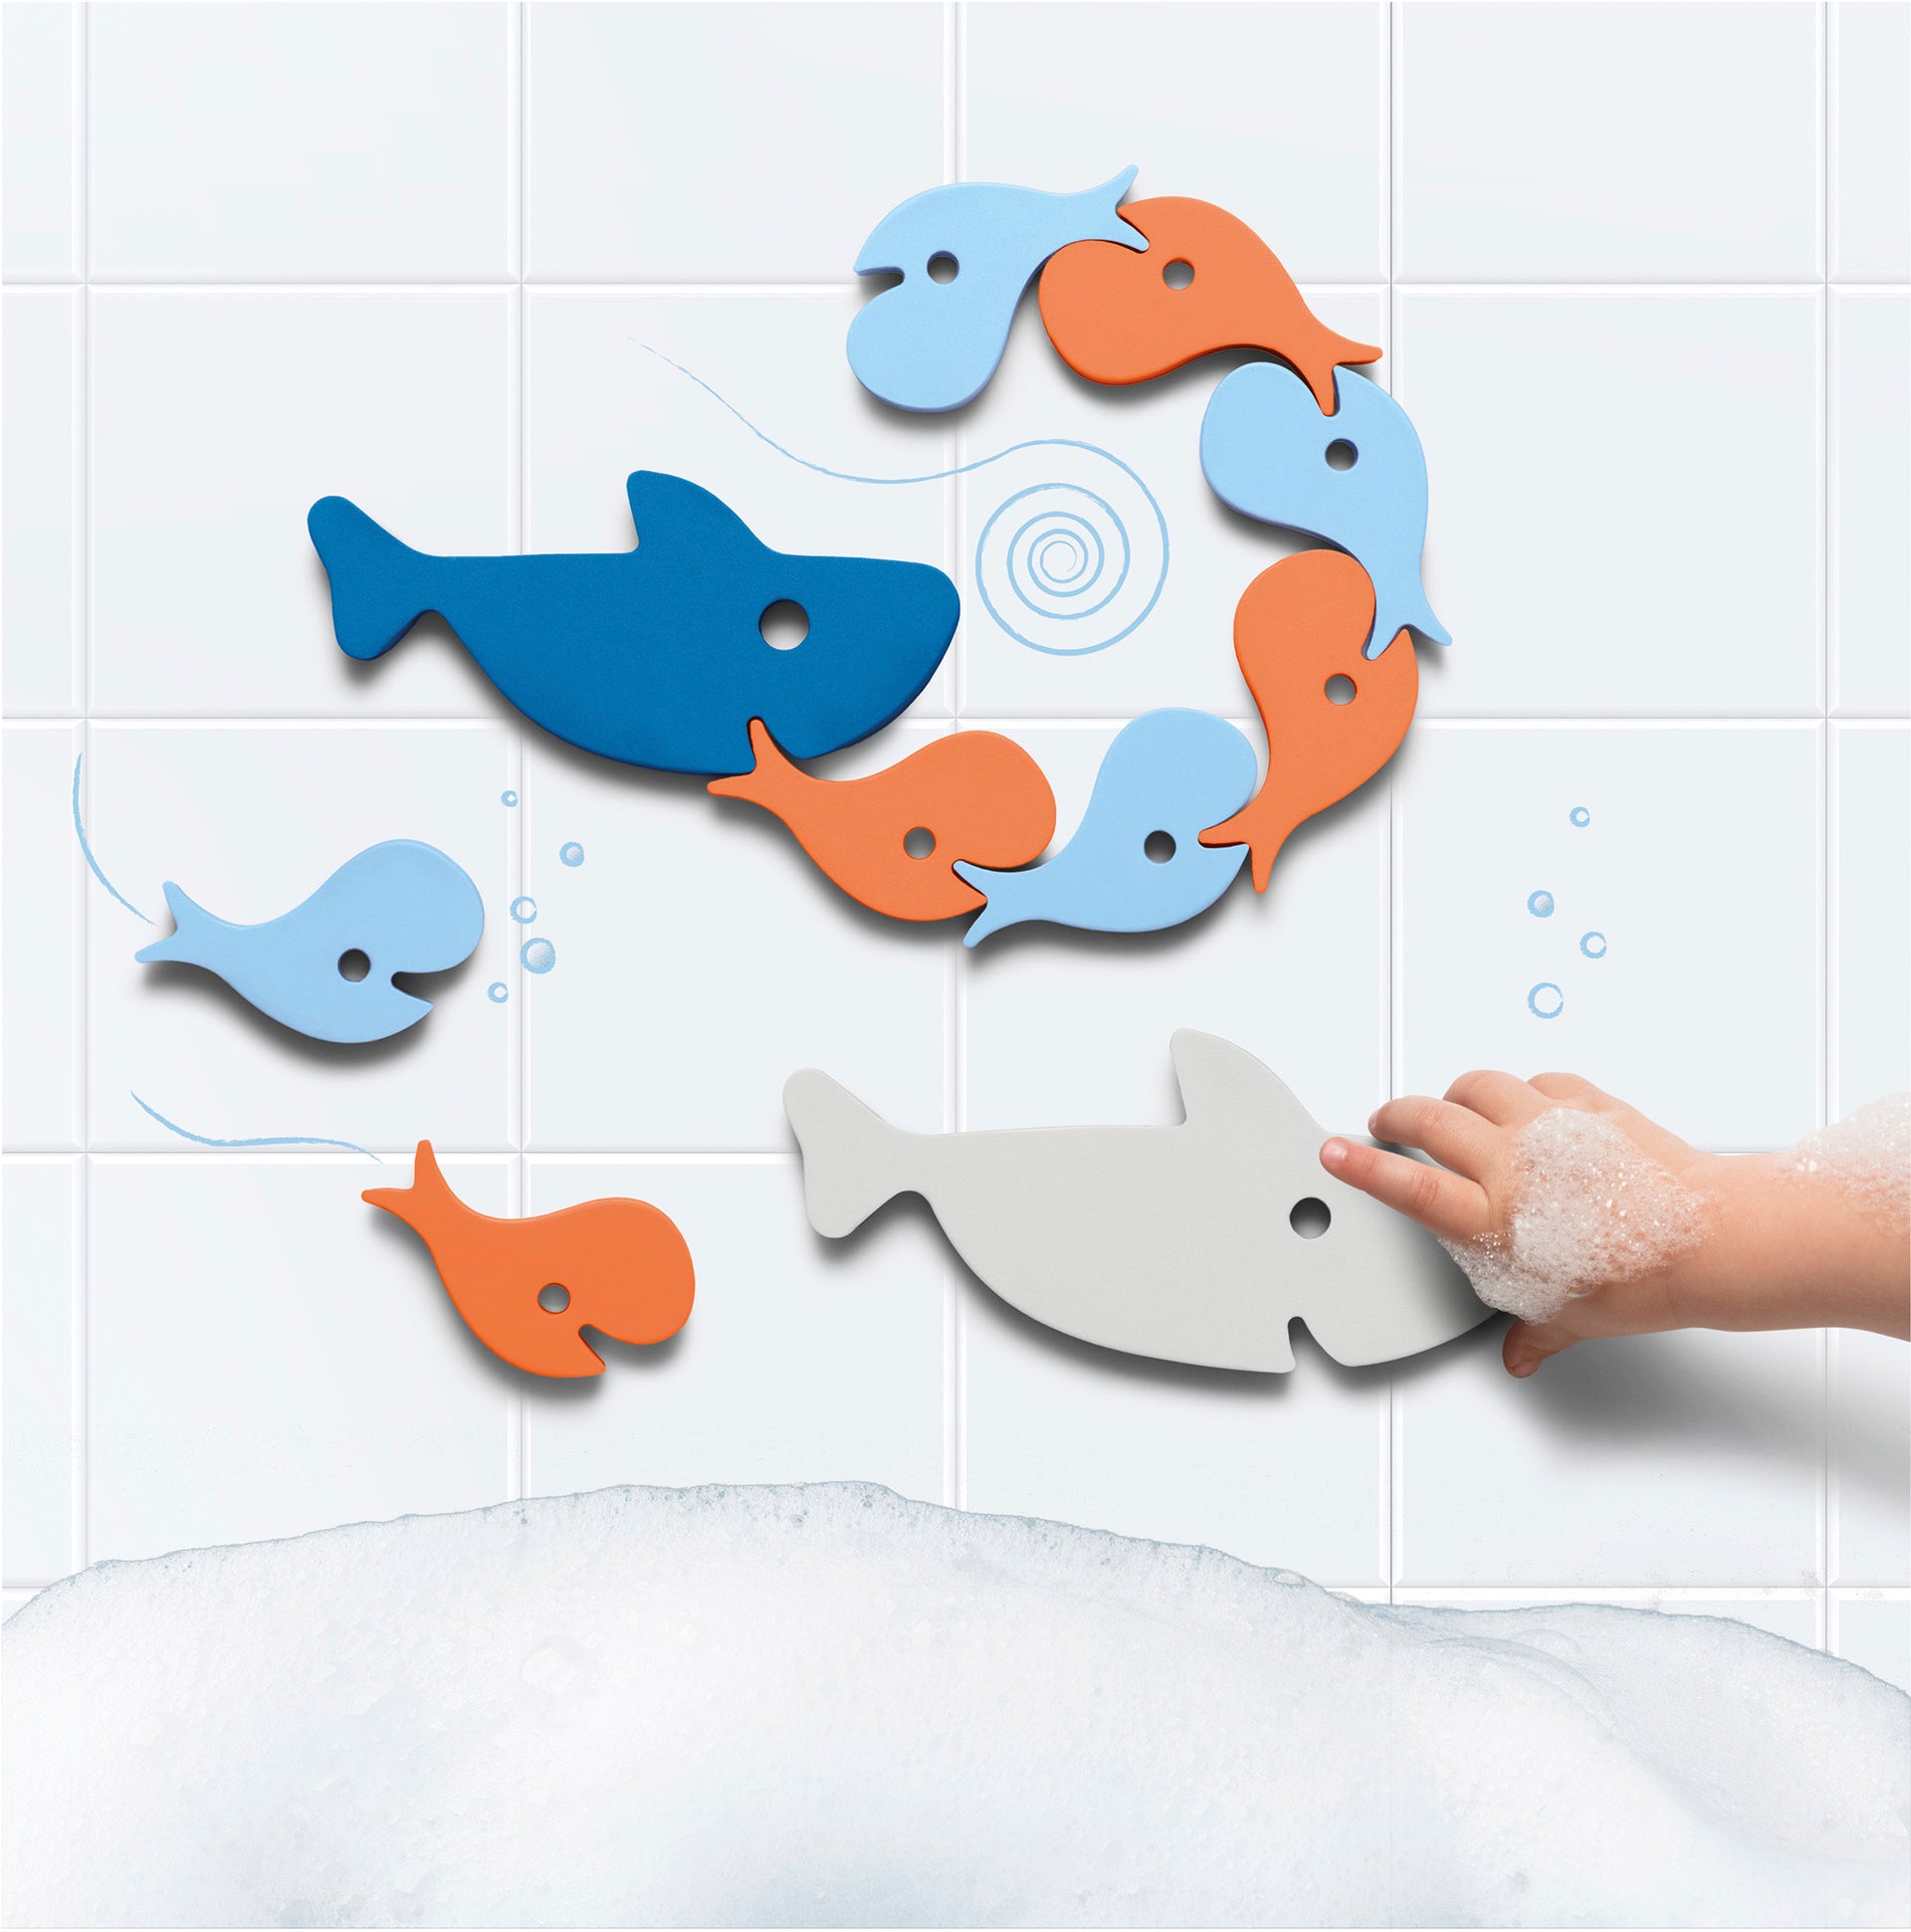 Quut Bath Puzzle - Shark